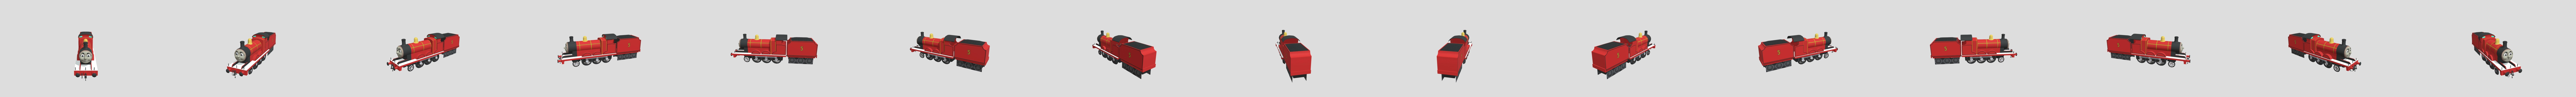 Red Engine | 3D model